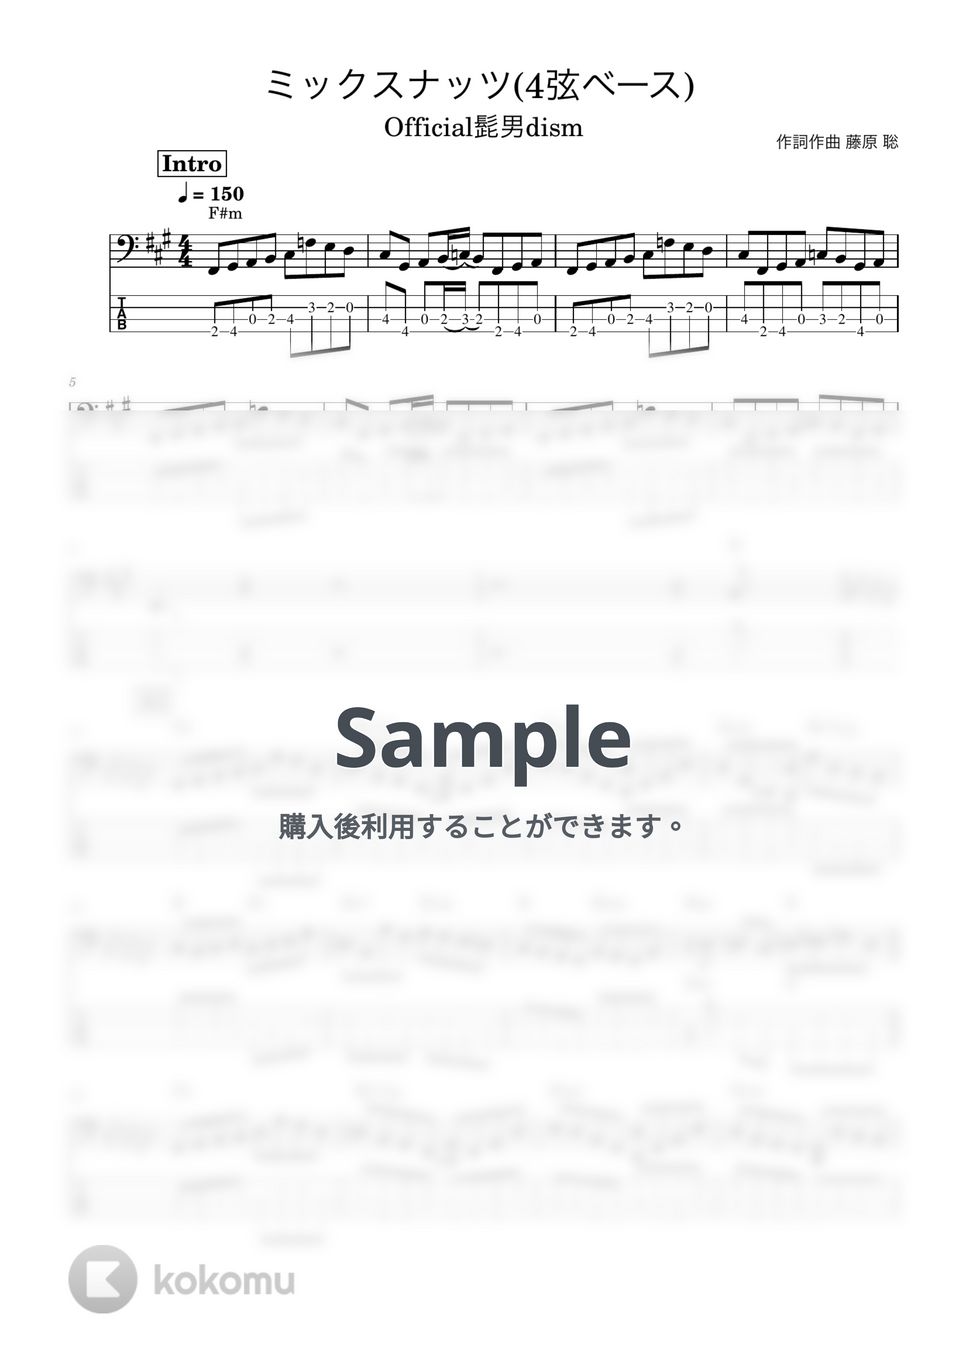 Official髭男dism - ミックスナッツ (アニメ『SPY×FAMILY』オープニングテーマ、ベース譜) by Kodai Hojo